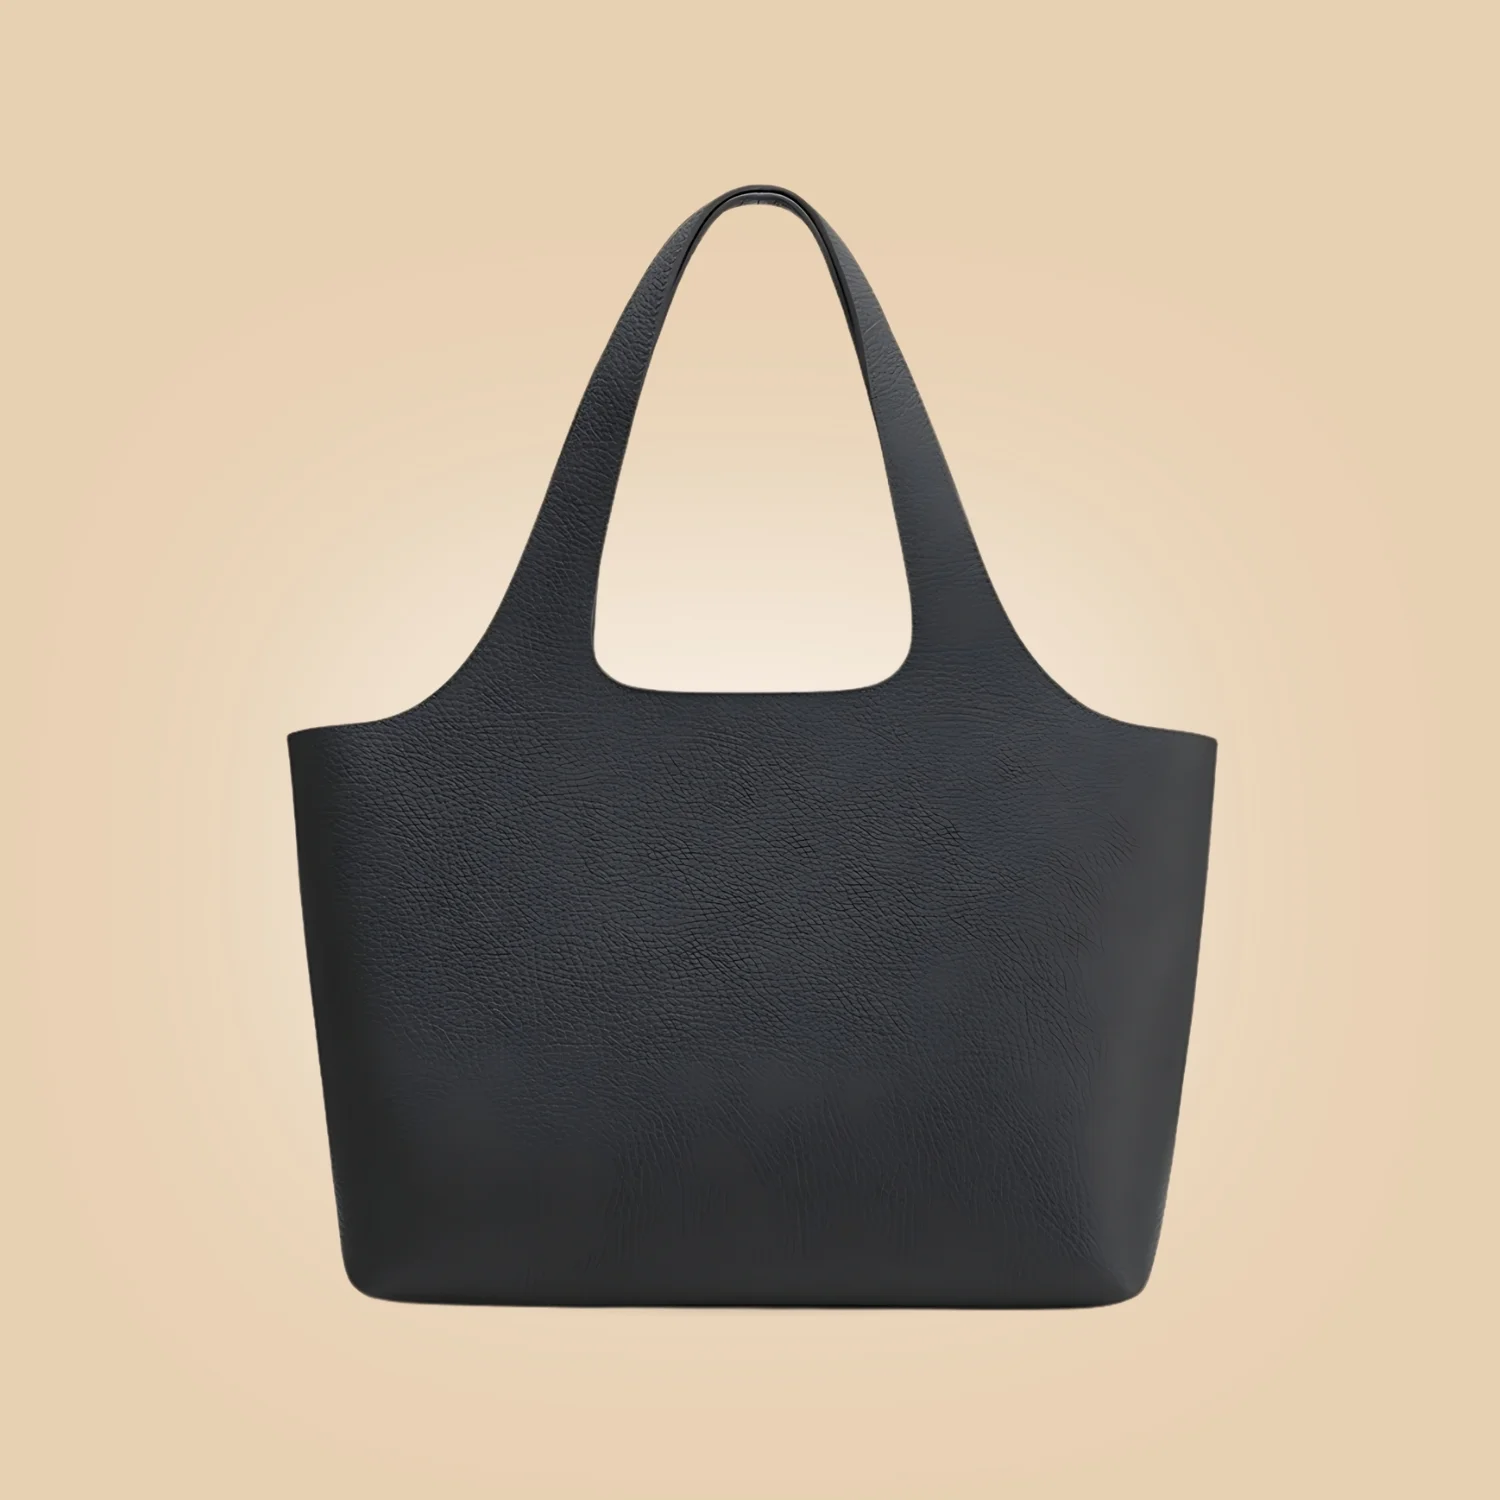 Stylish Handmade Black Leather Tote Handbag